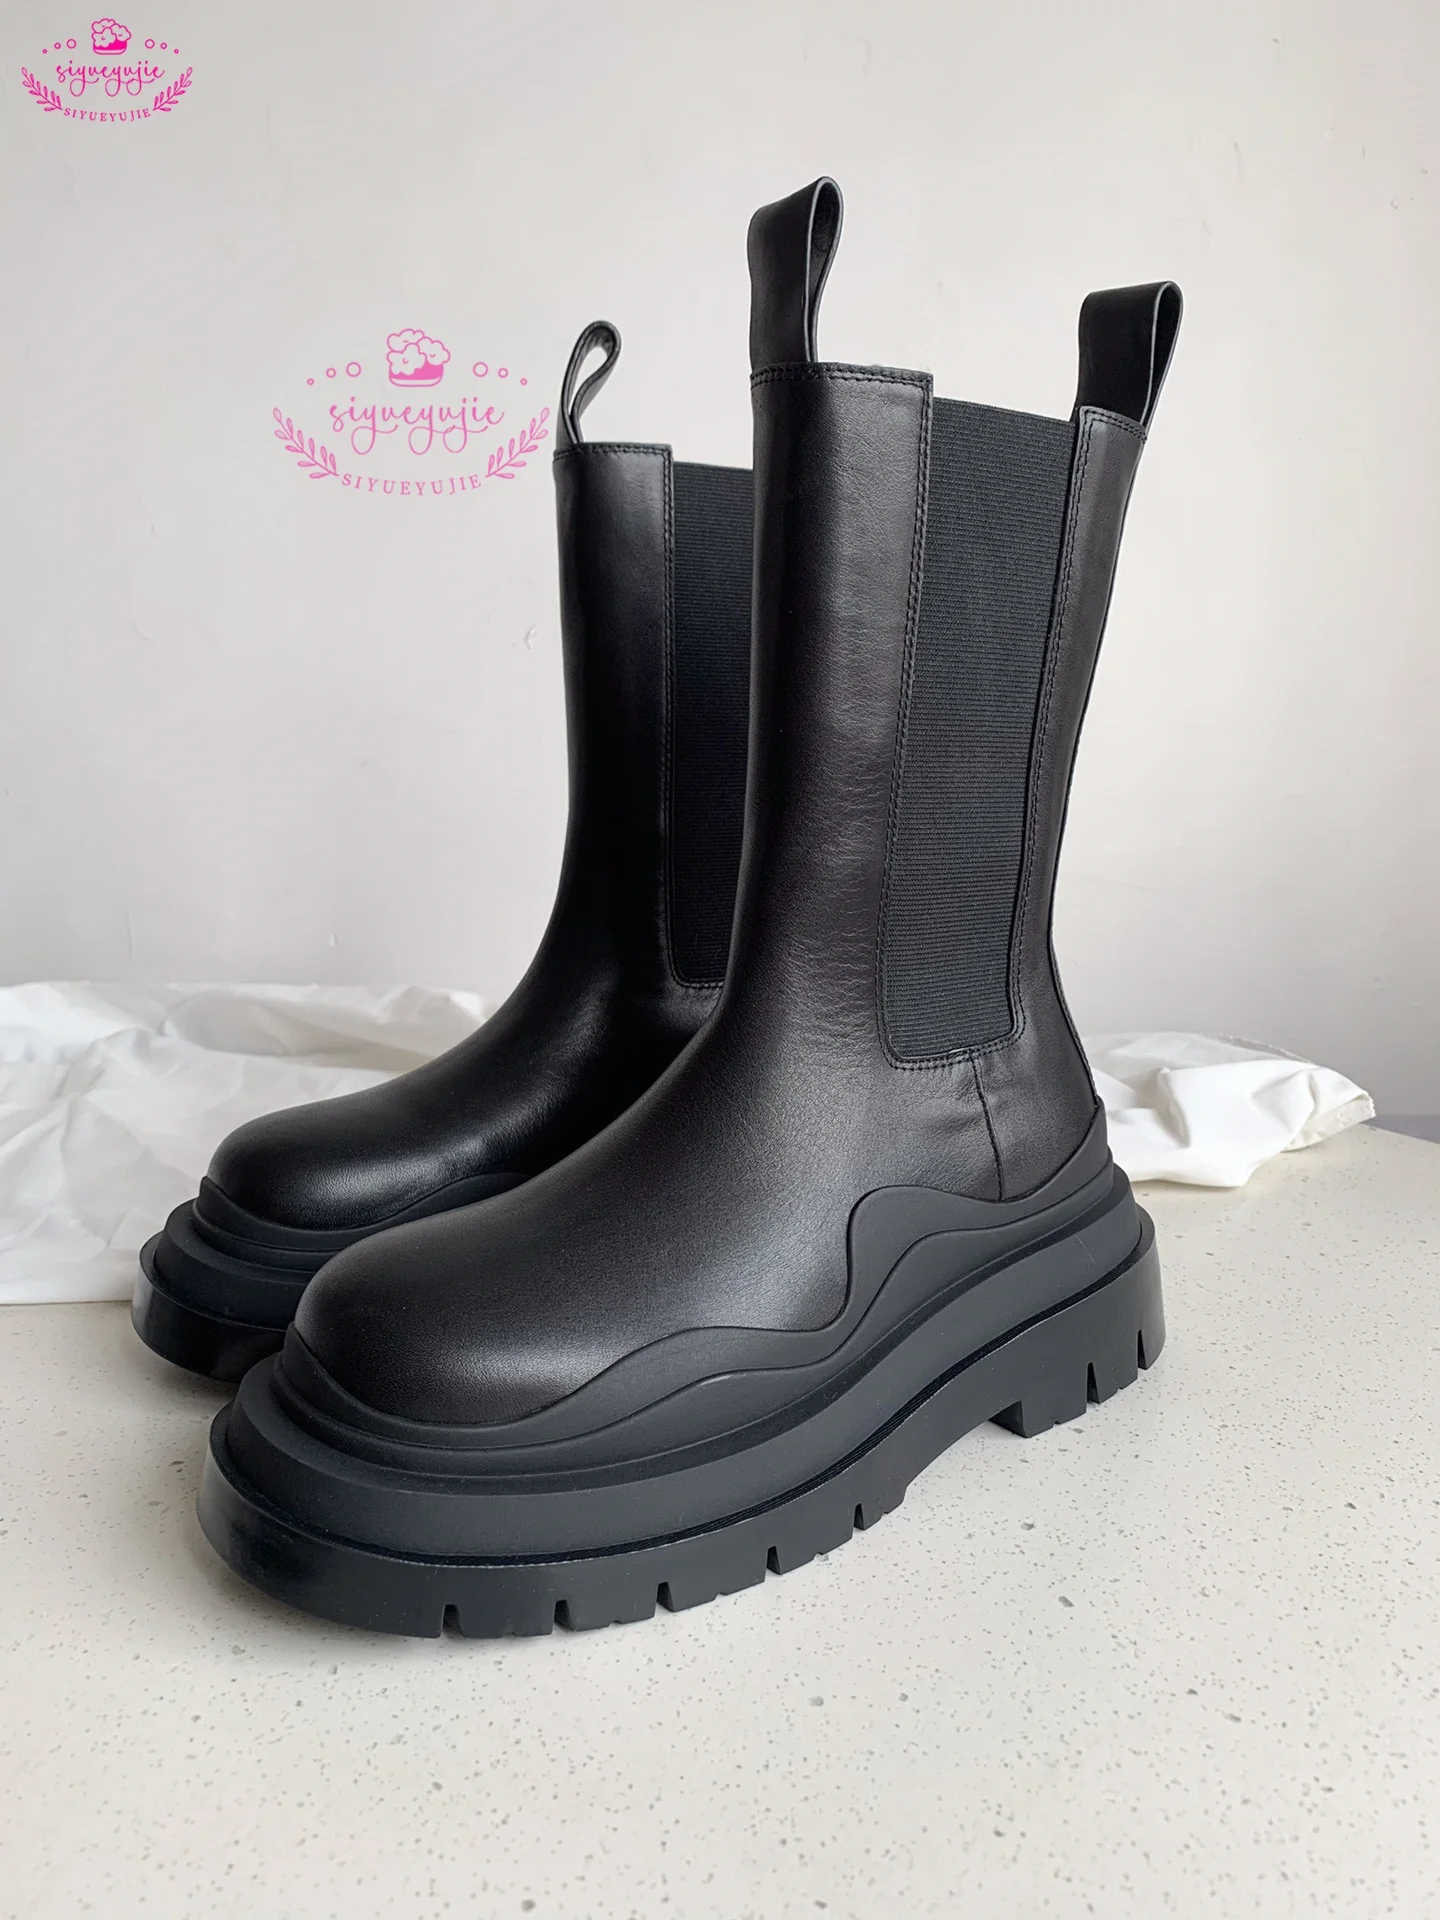 Sudan Array af Gurgle Big Size Orange Mid Calf Women Boots Thick Sole Height Increasing High  Winter Chelsea Boots Women Fashion Platform Rain Boots - AliExpress